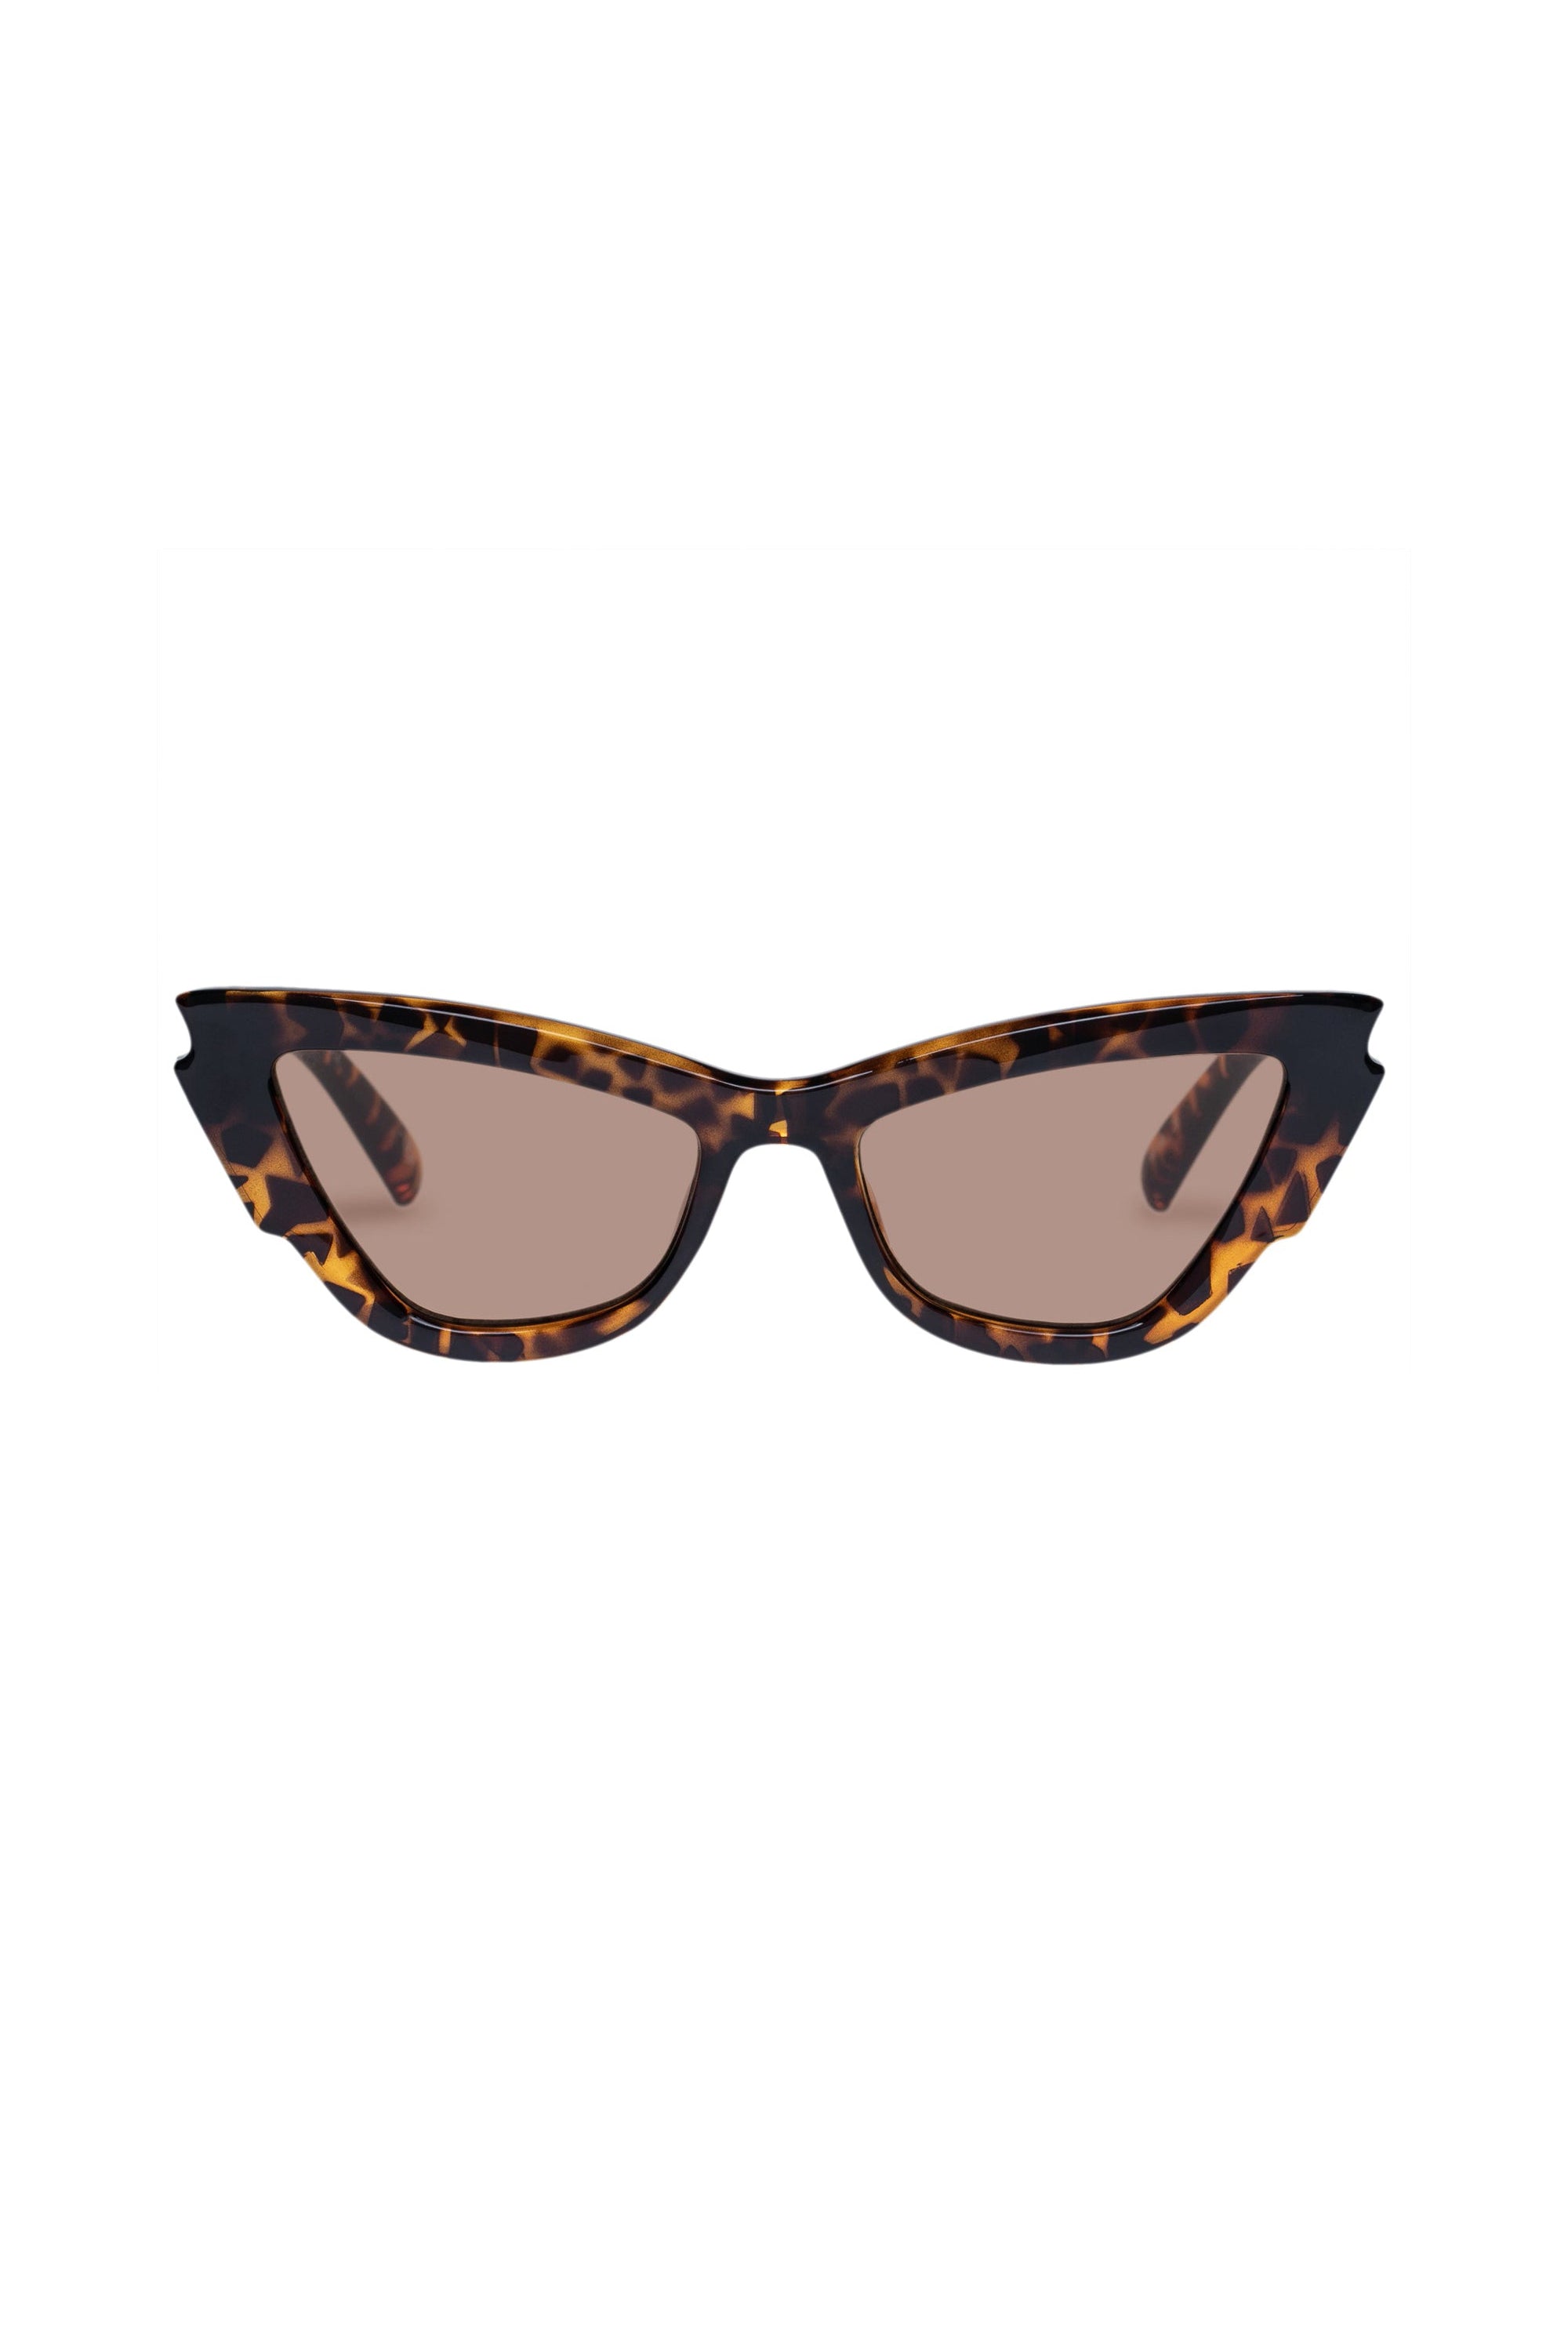 Lost Days Sunglasses - Leopard Tort